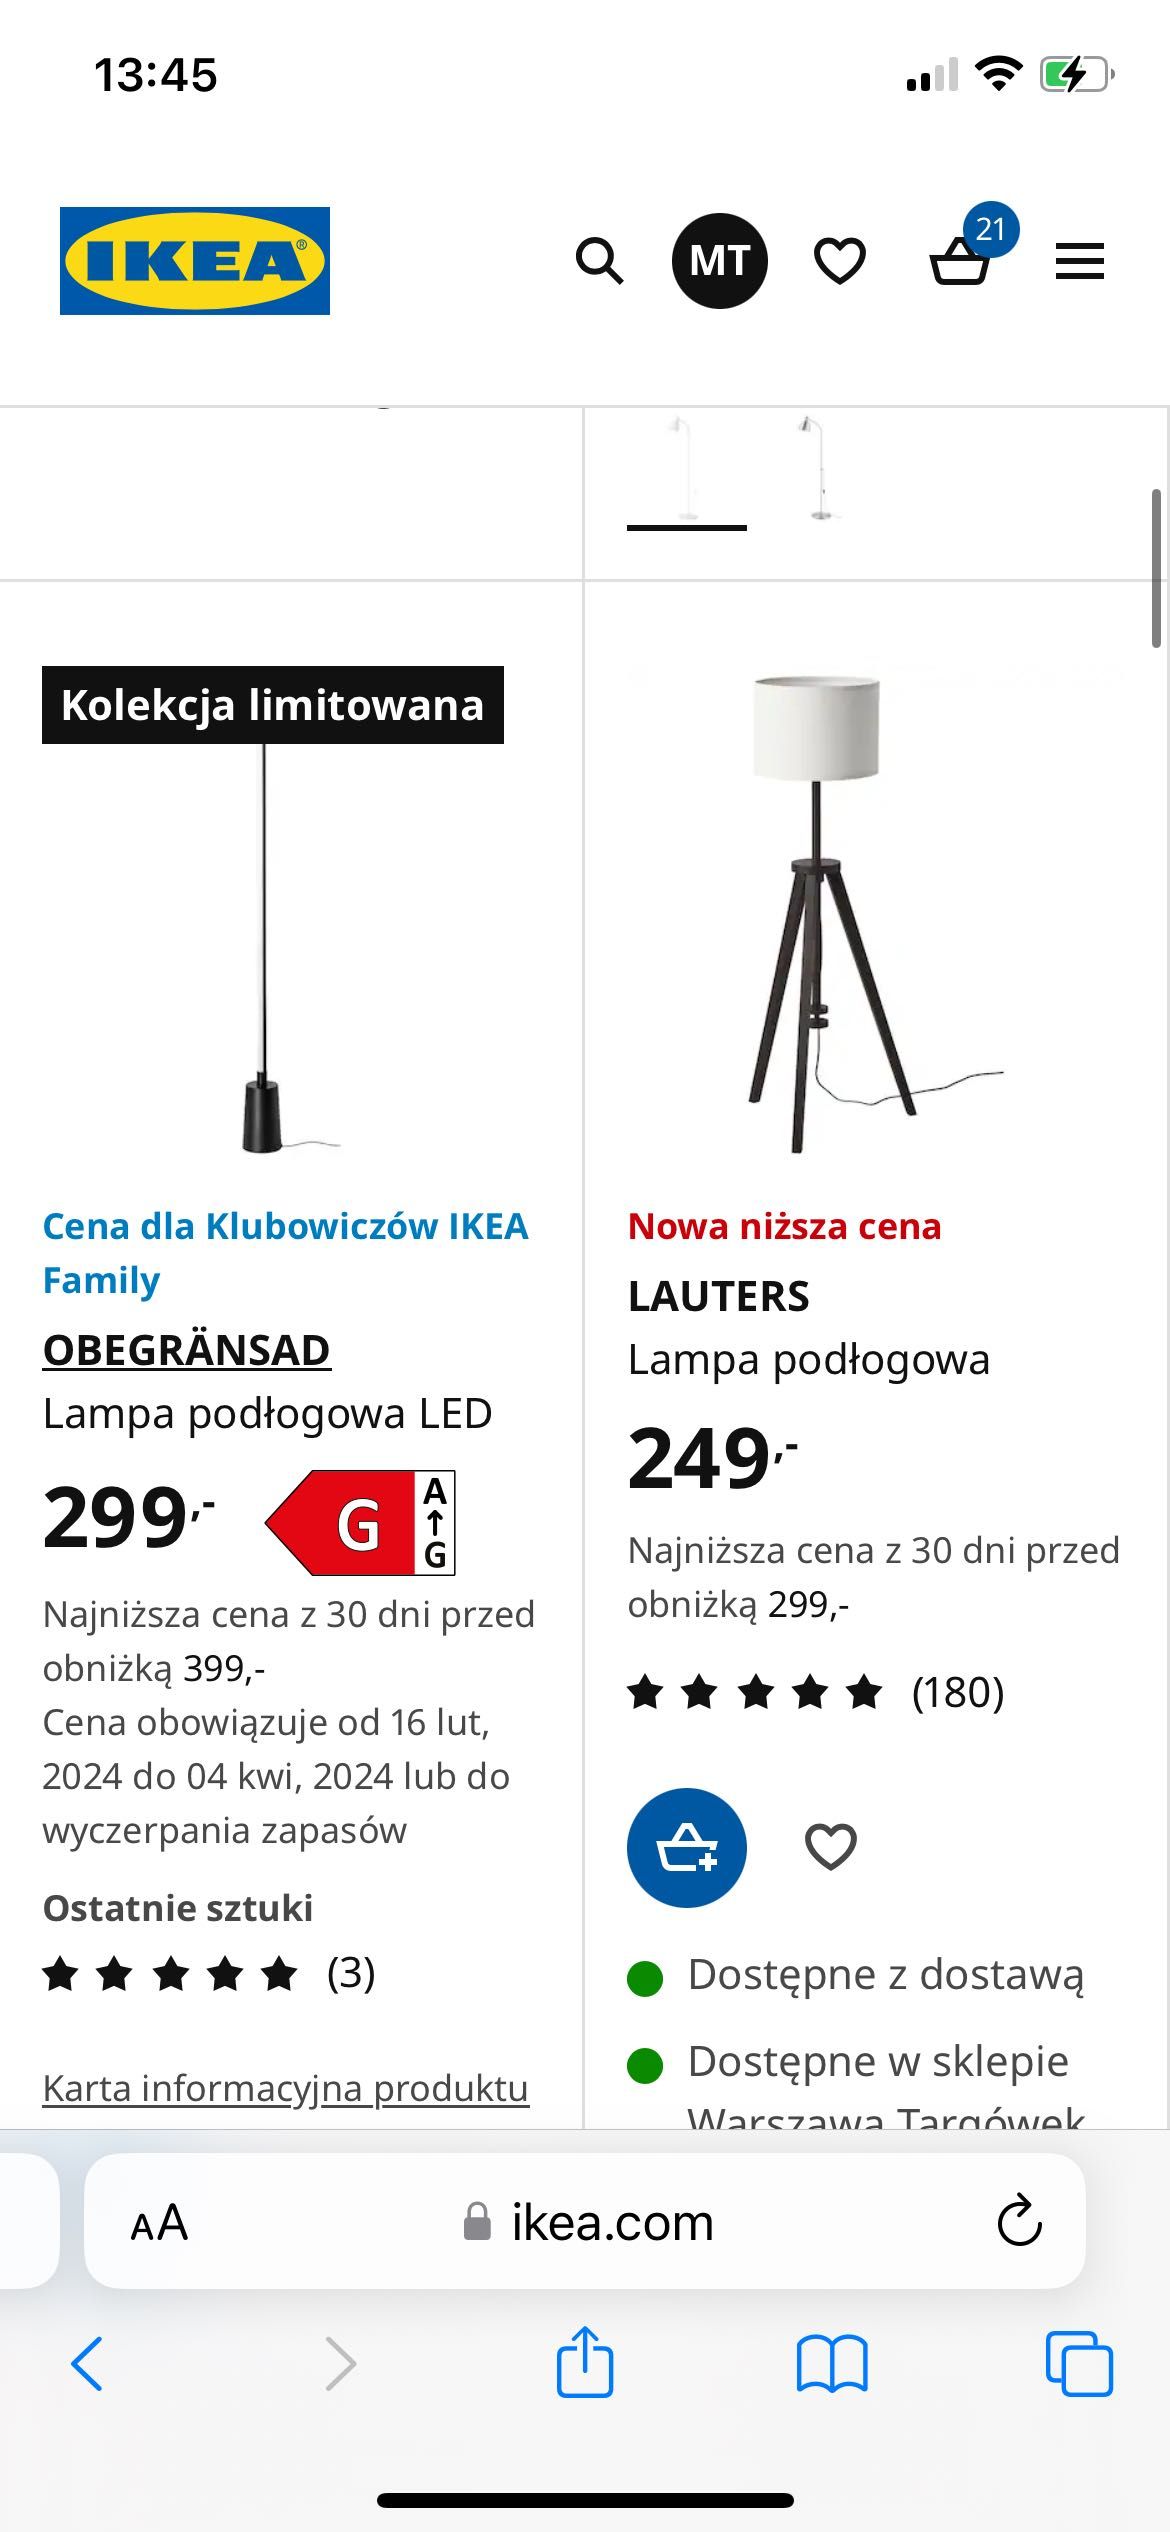 Lampa lauters Ikea stan bardzo dobry